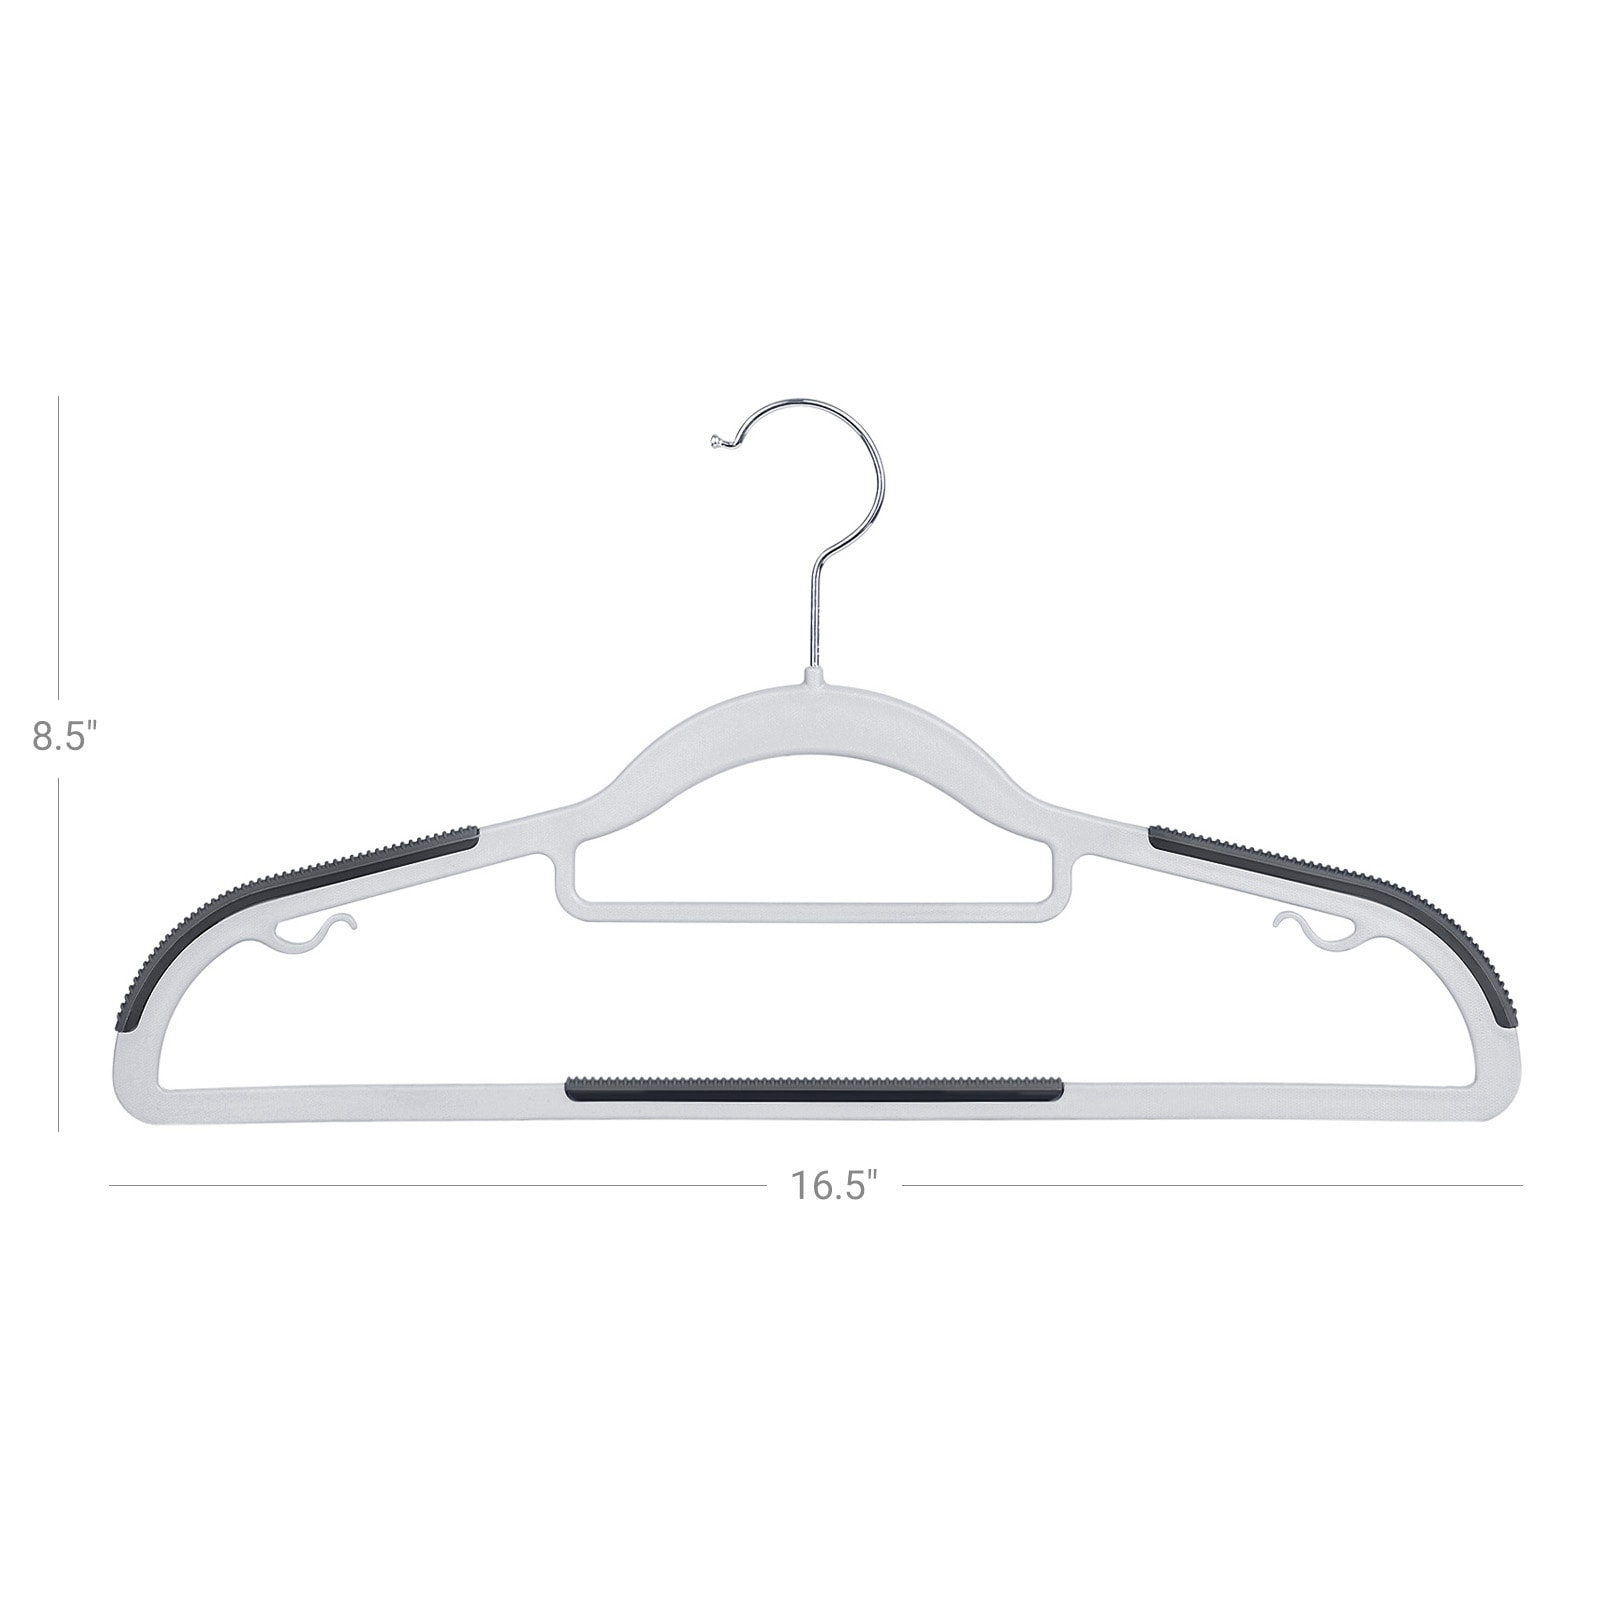 SONGMICS Coat Hangers, Pack of 50, Heavy Duty Plastic Hangers with Non-Slip Design, Space-Saving Clothes Hangers, 0.5 cm Thick, 42 cm Long, 360°